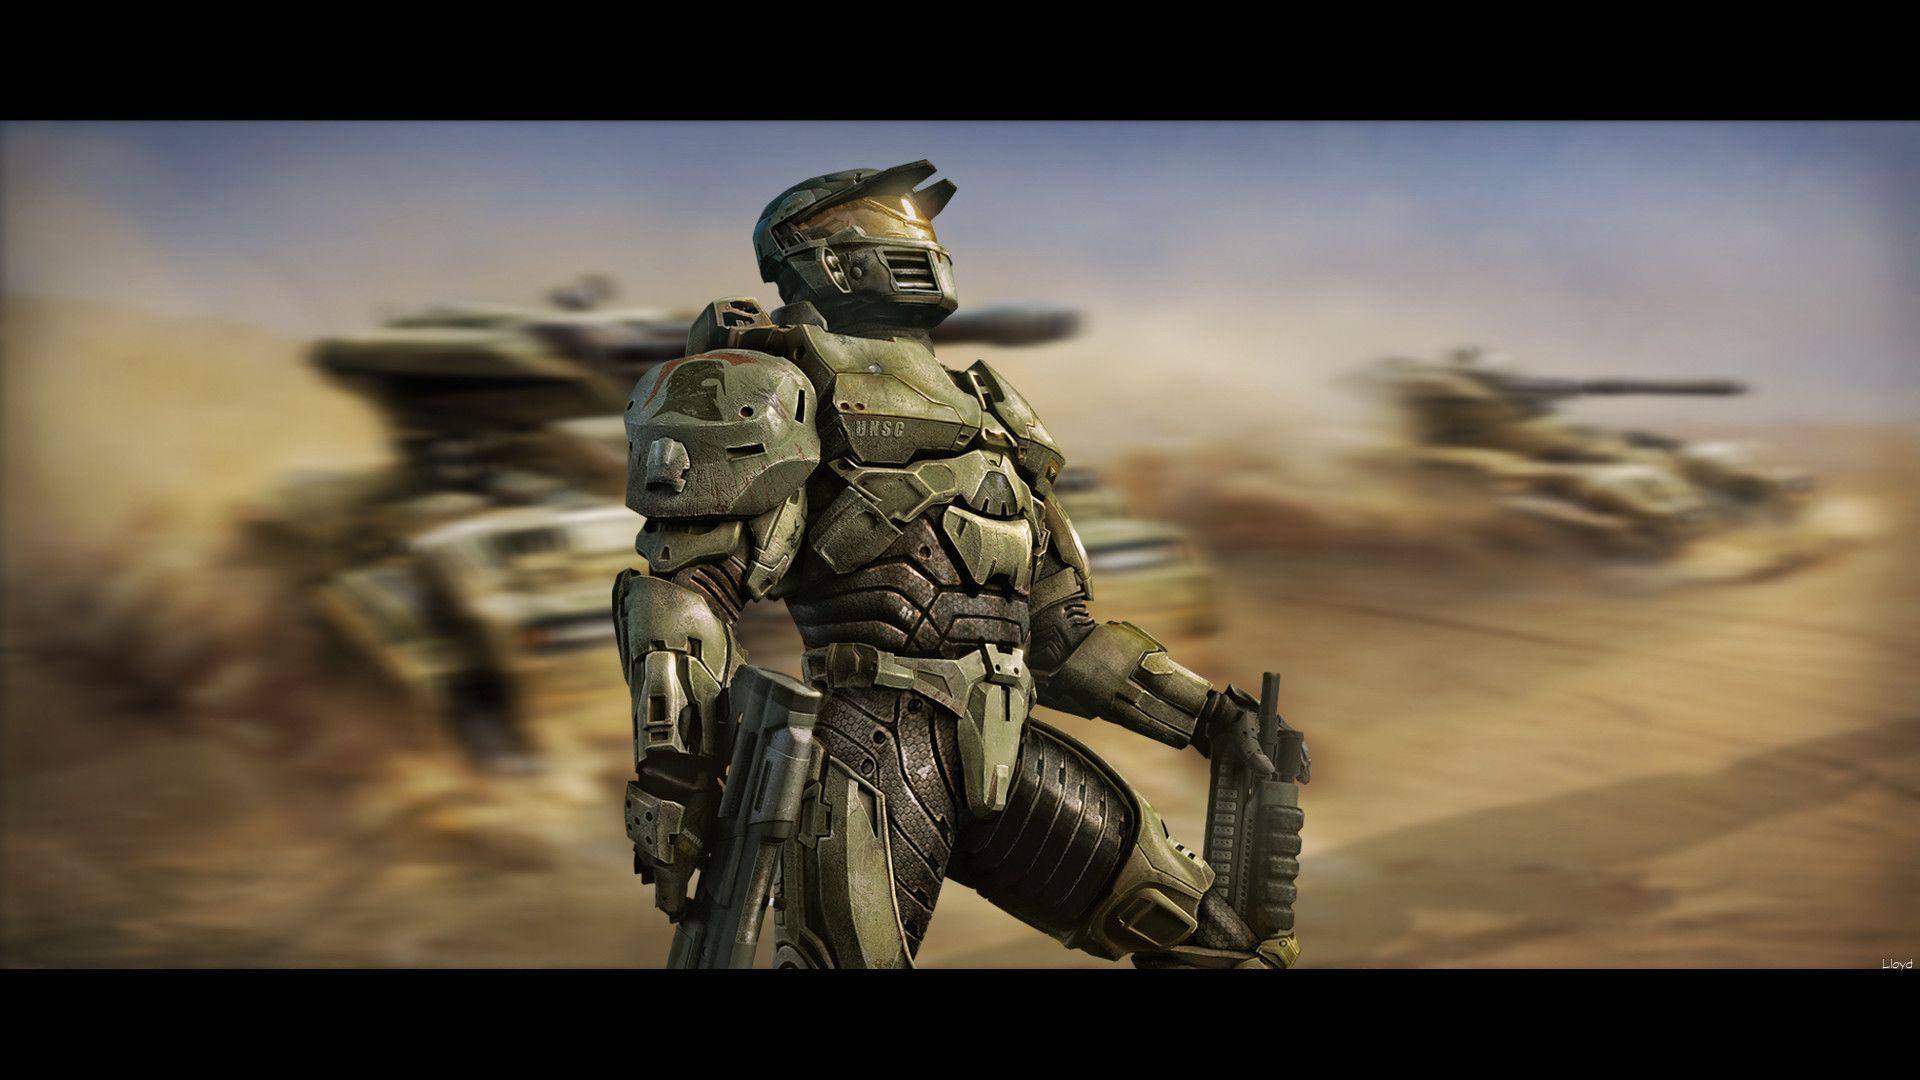 image For > Halo Wars Spartan Wallpaper